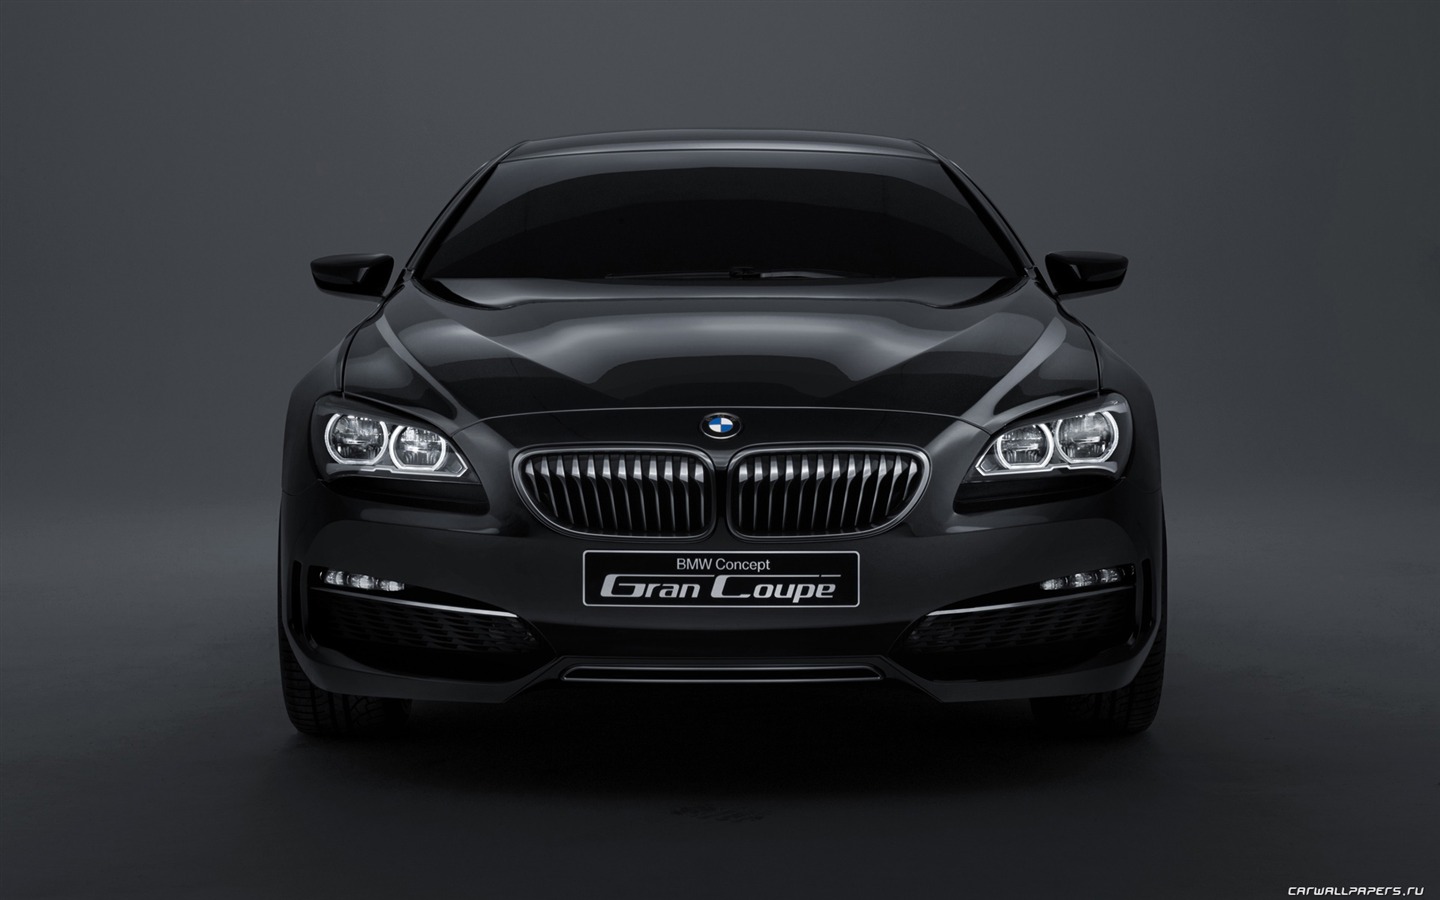 BMW Concept Gran Coupe - 2010 寶馬 #4 - 1440x900